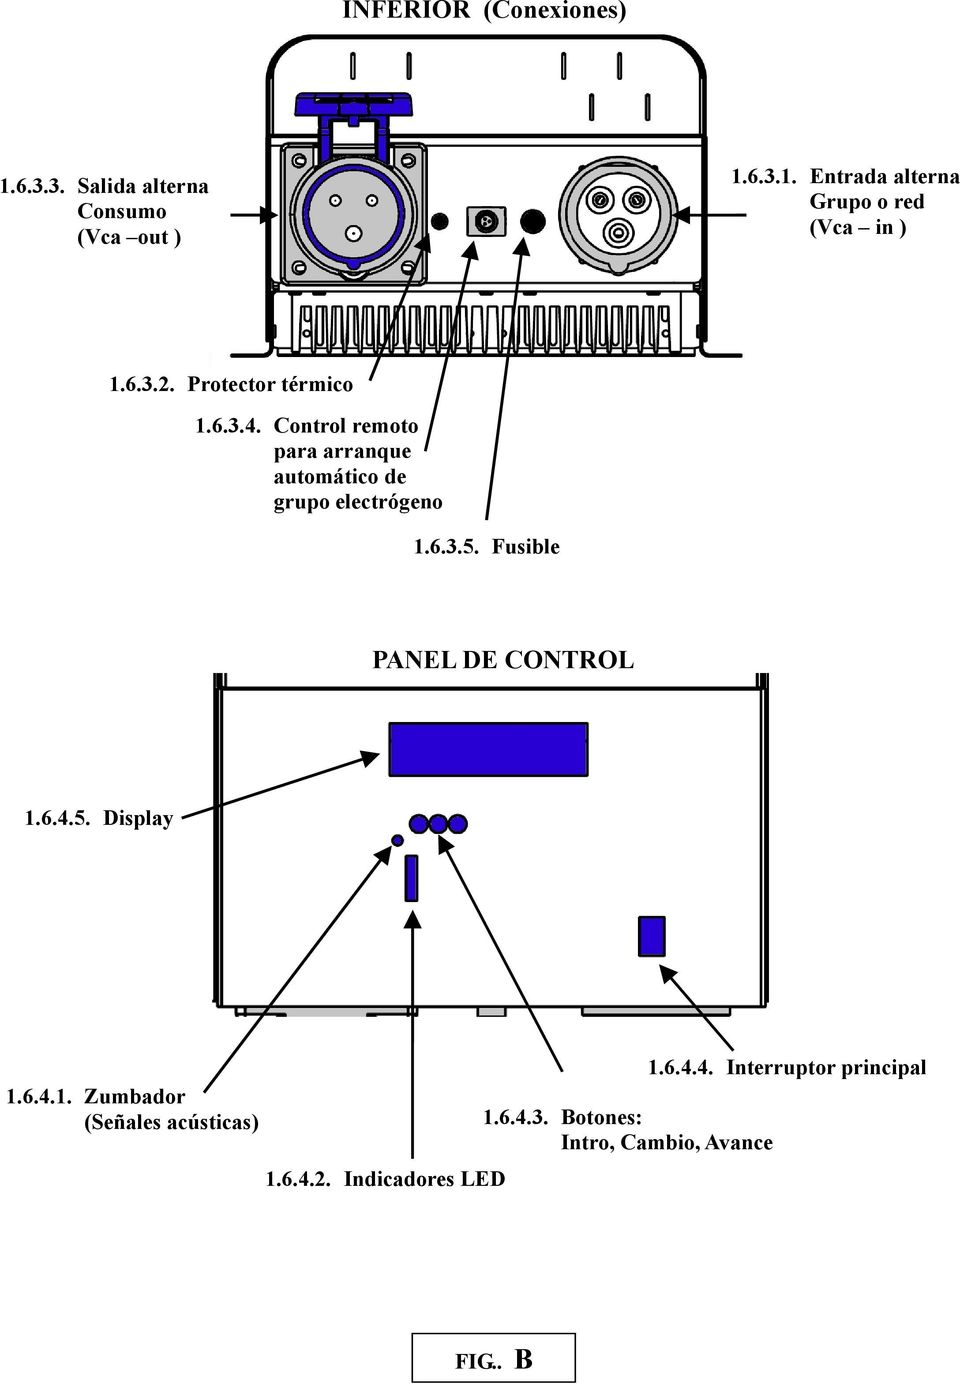 Fusible PANEL DE CONTROL 1.6.4.5. Display 1.6.4.1. Zumbador (Señales acústicas) 1.6.4.2.